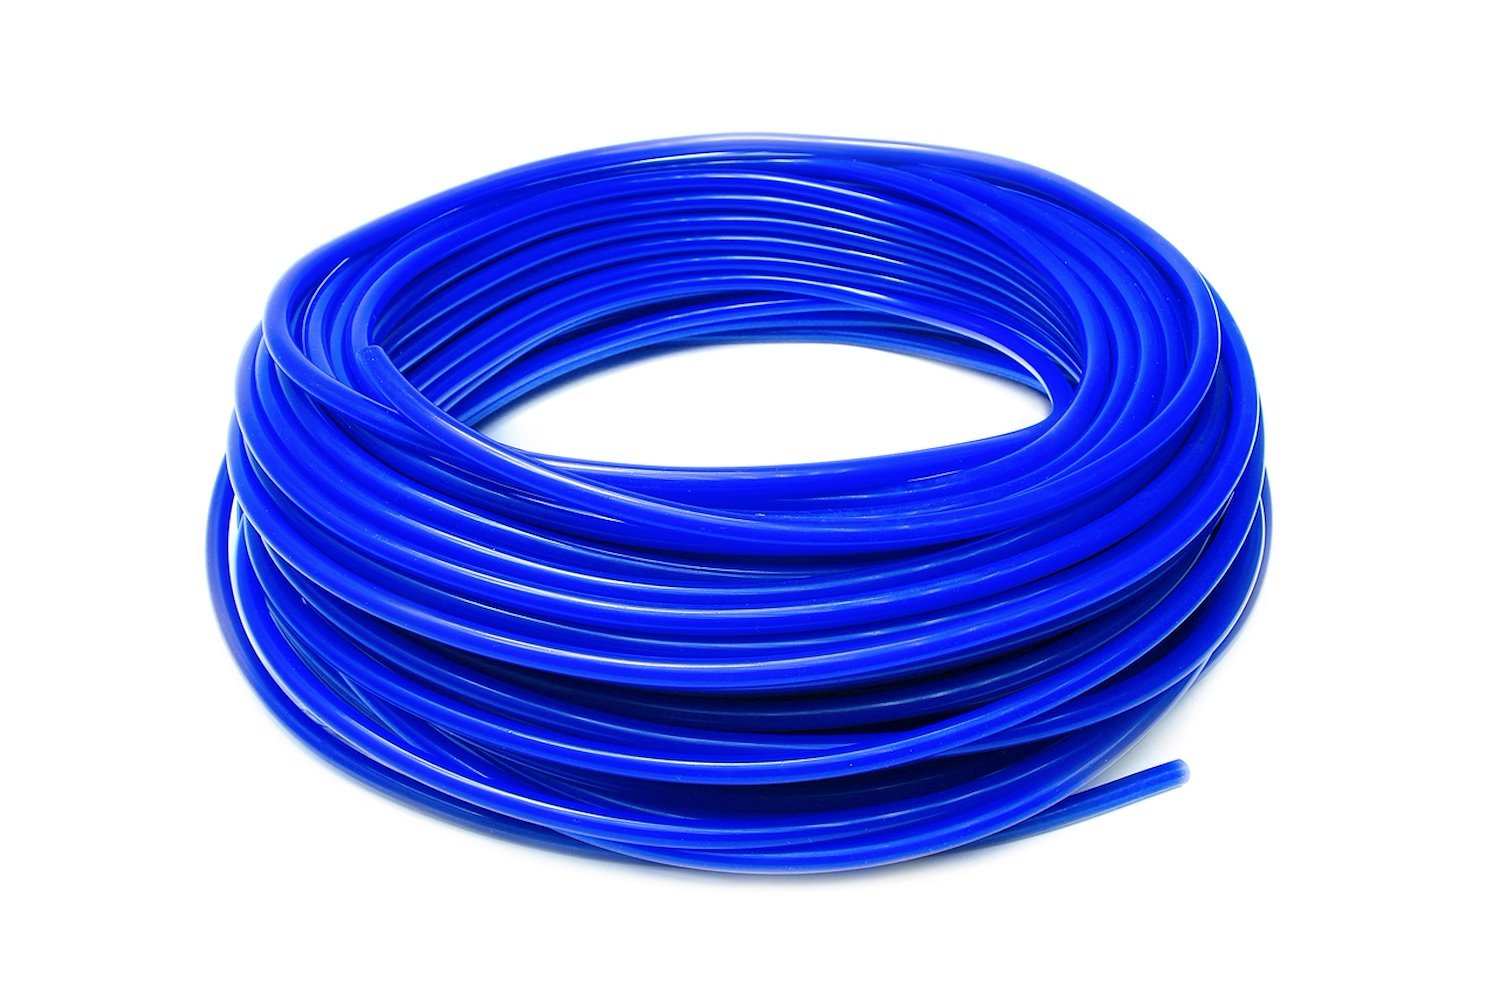 HTSVH2-BLUEx50 High-Temperature Silicone Vacuum Hose Tubing, 5/64 in. ID, 50 ft. Roll, Blue